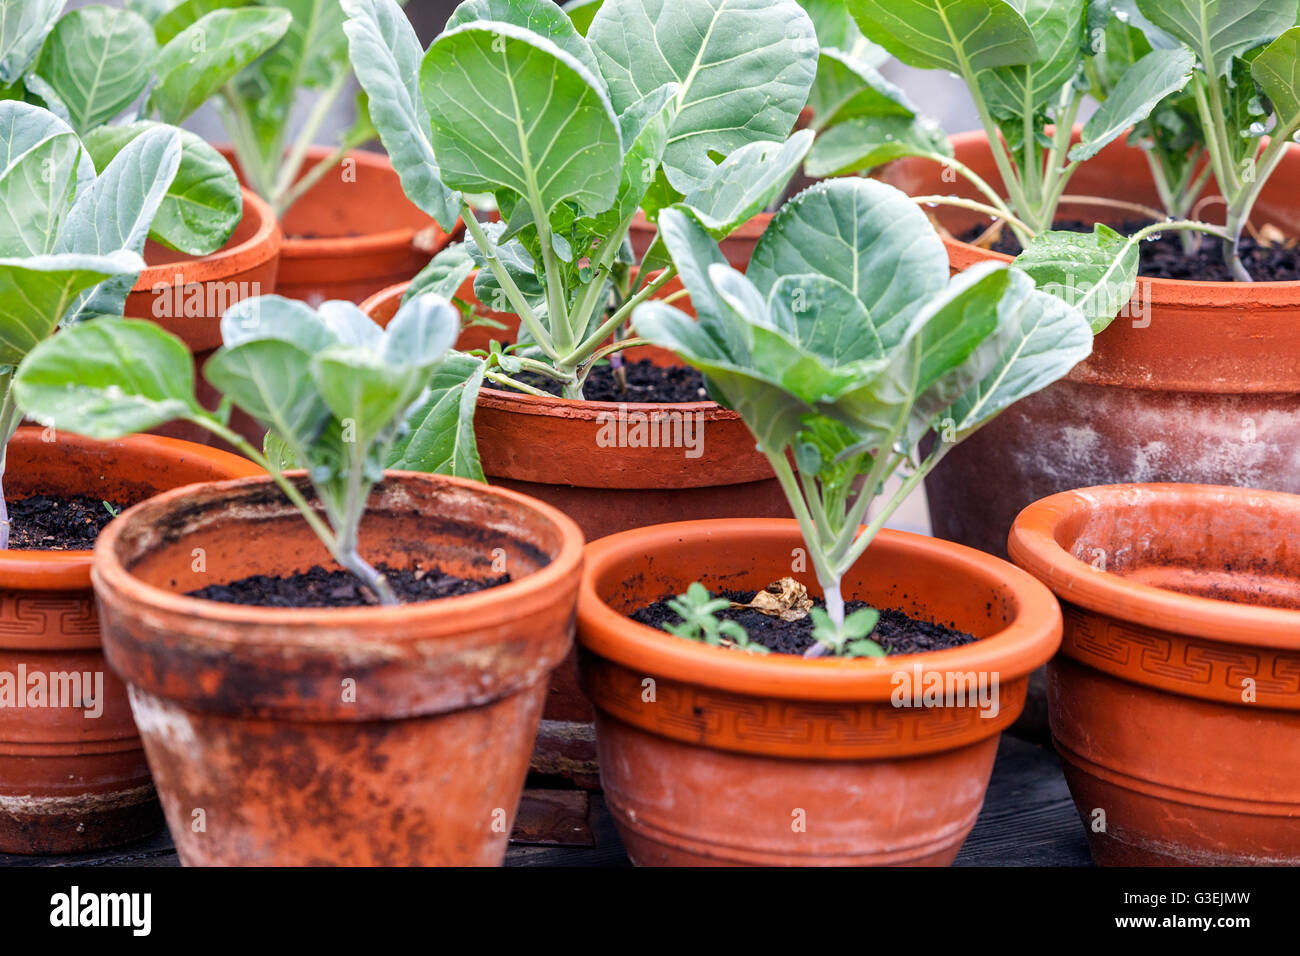 Young seedlings Kohlrabi growing plant pots garden terracotta growing vegetables Stock Photo